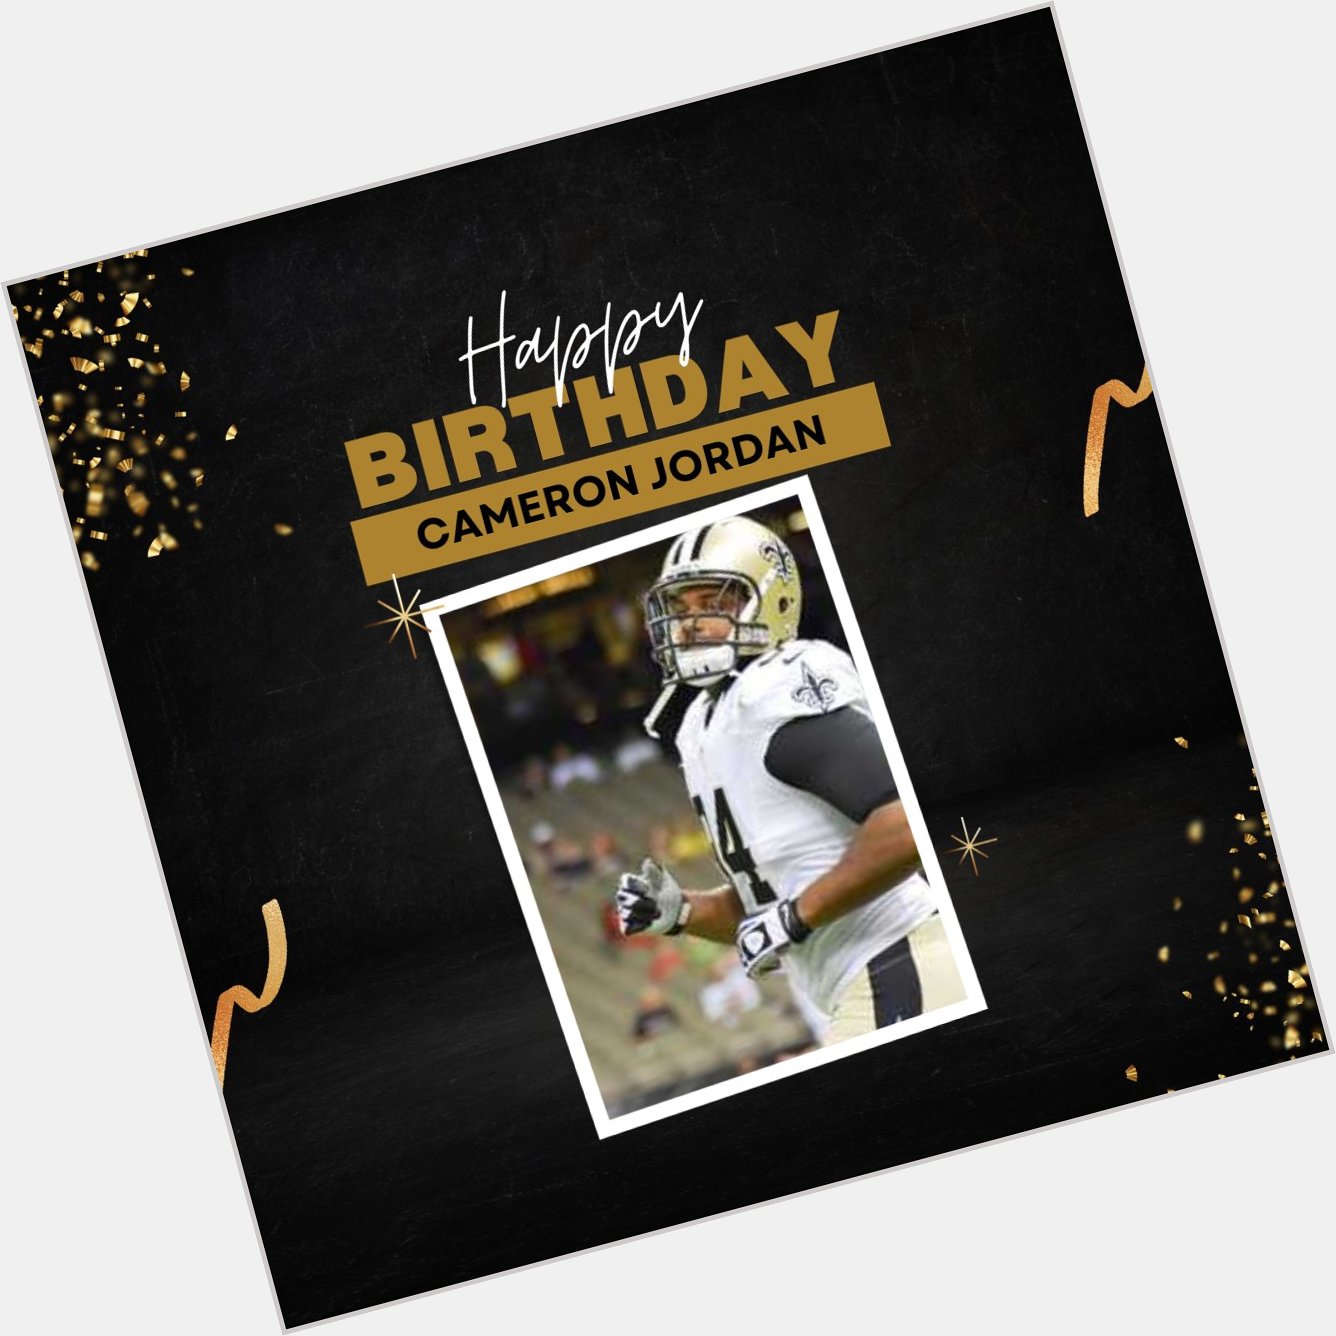 WDSU wishes Saints player Cameron Jordan a happy birthday! He is 33 today. 